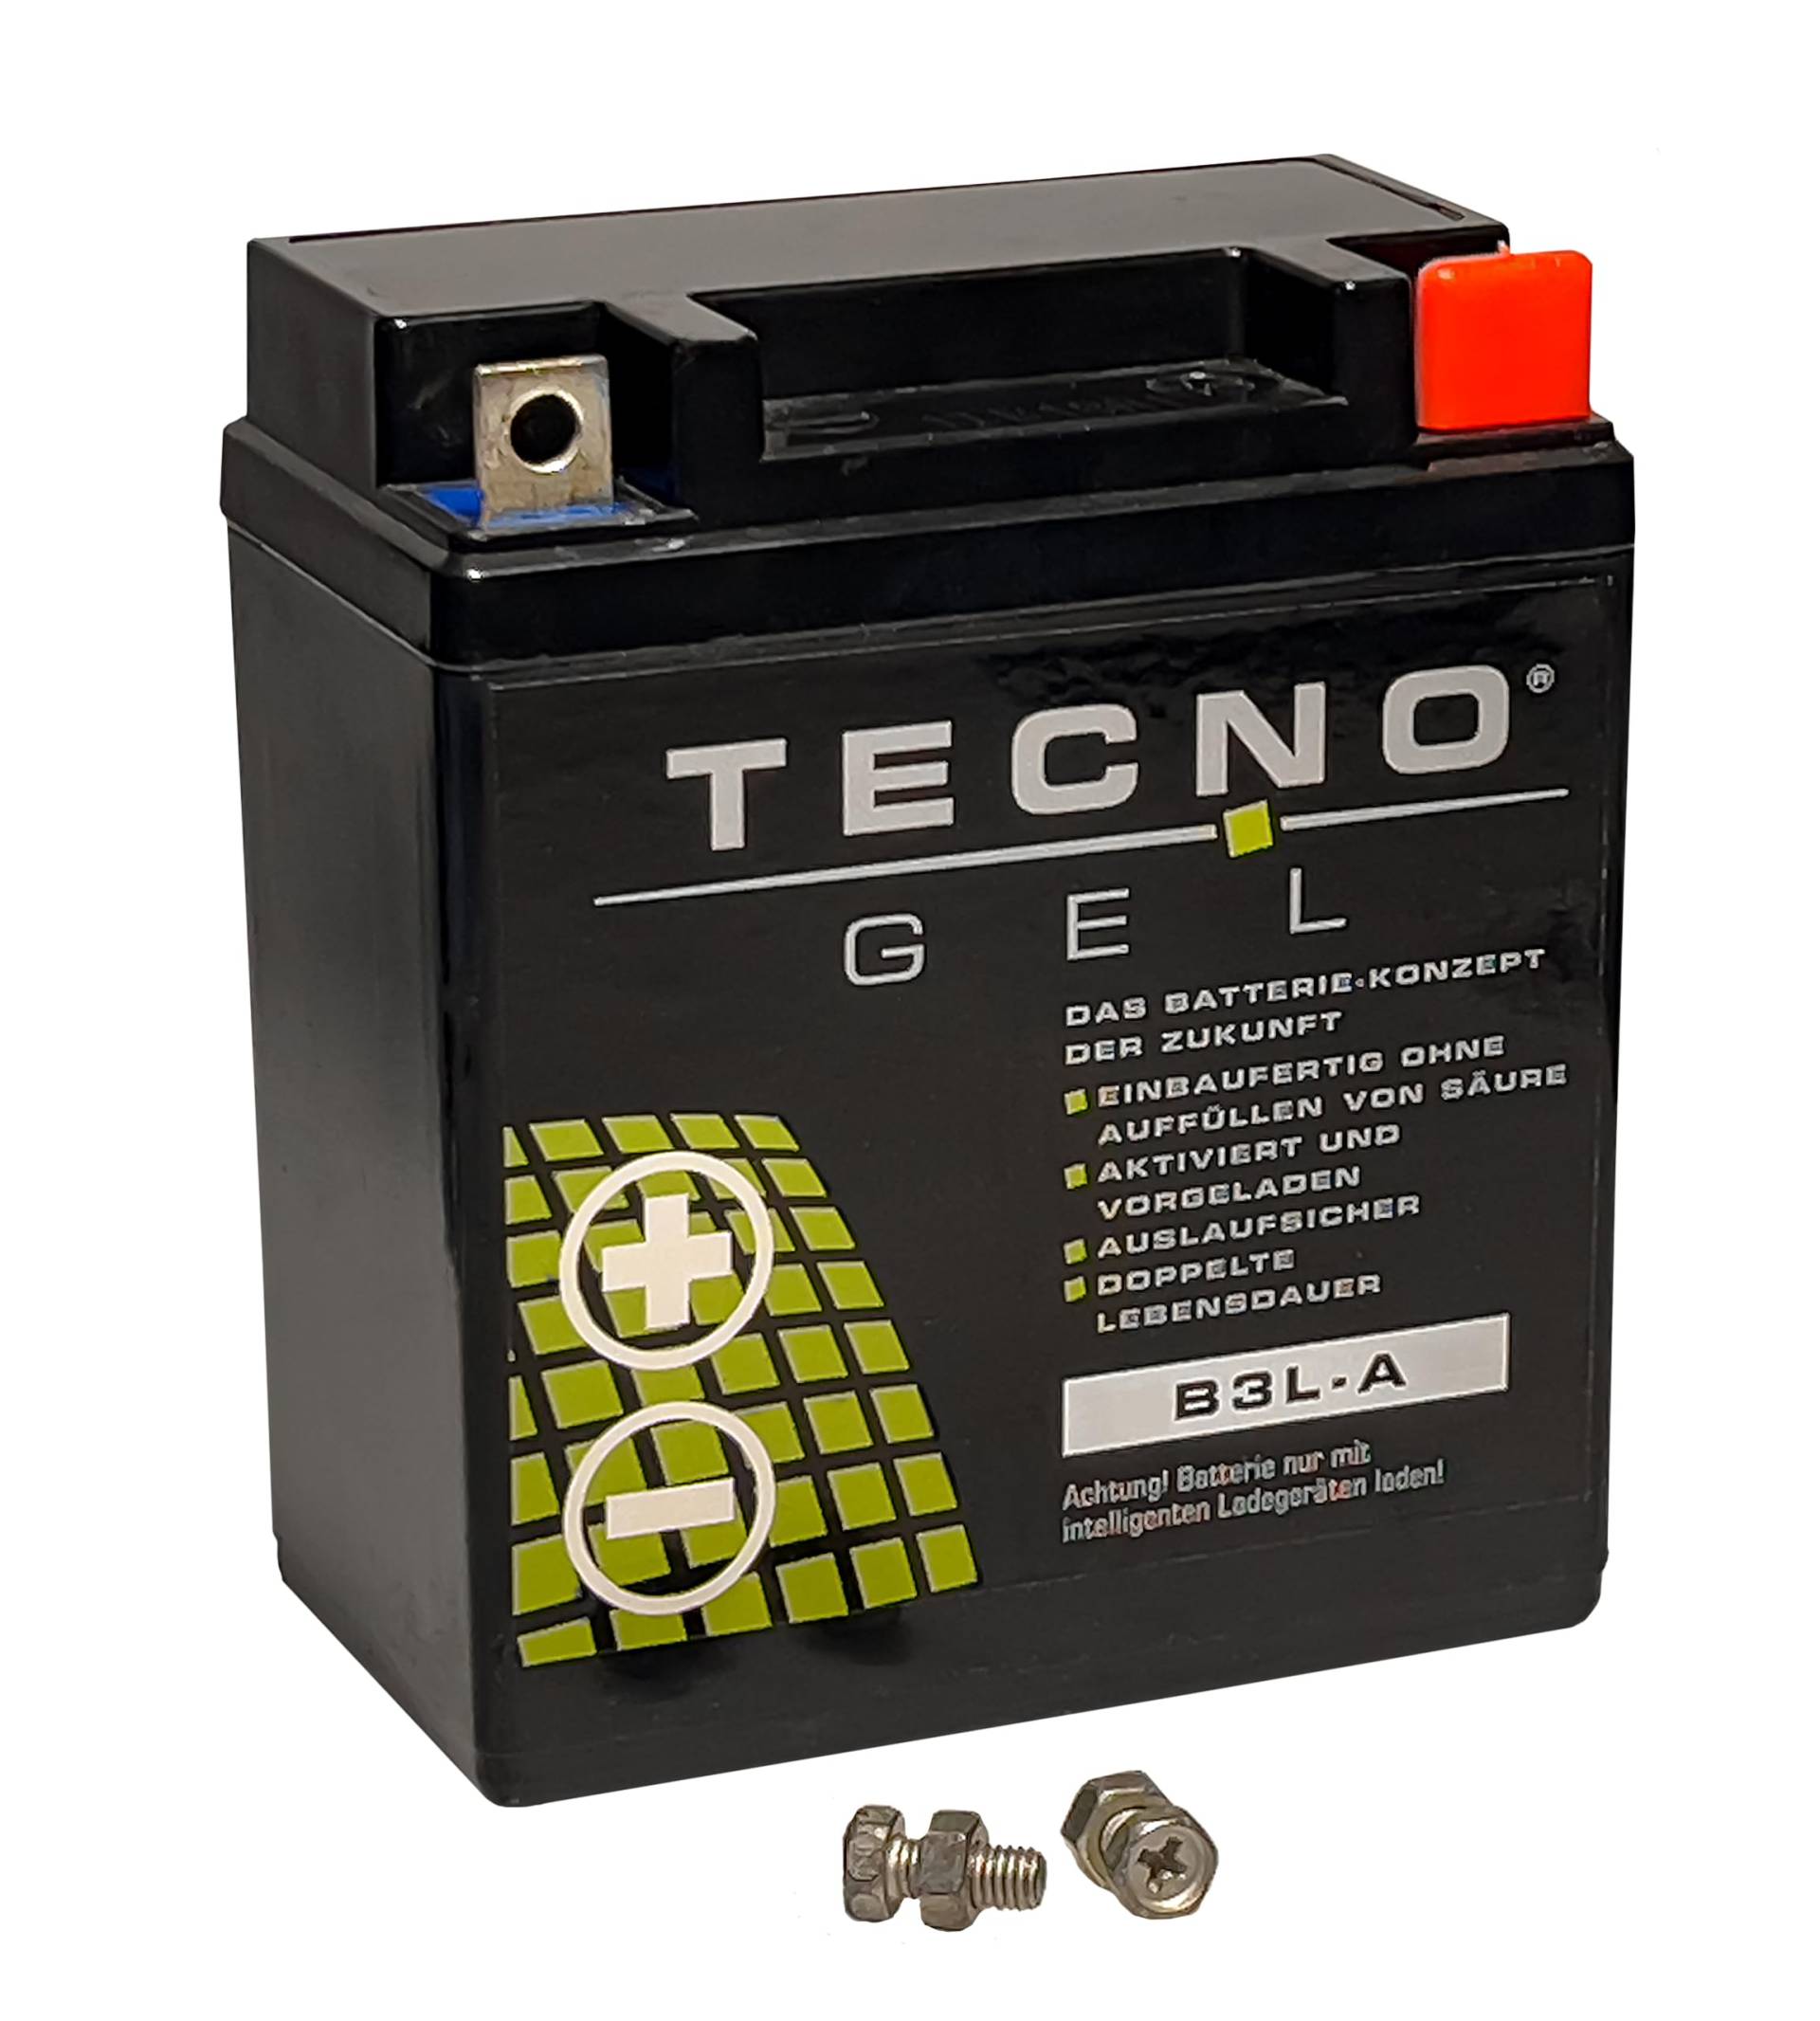 TECNO-GEL Motorrad-Batterie/Roller-Batterie YB3L-A, 12V Gel-Batterie 3Ah, 98x56x109 mm inkl. Pfand von Wirth-Federn